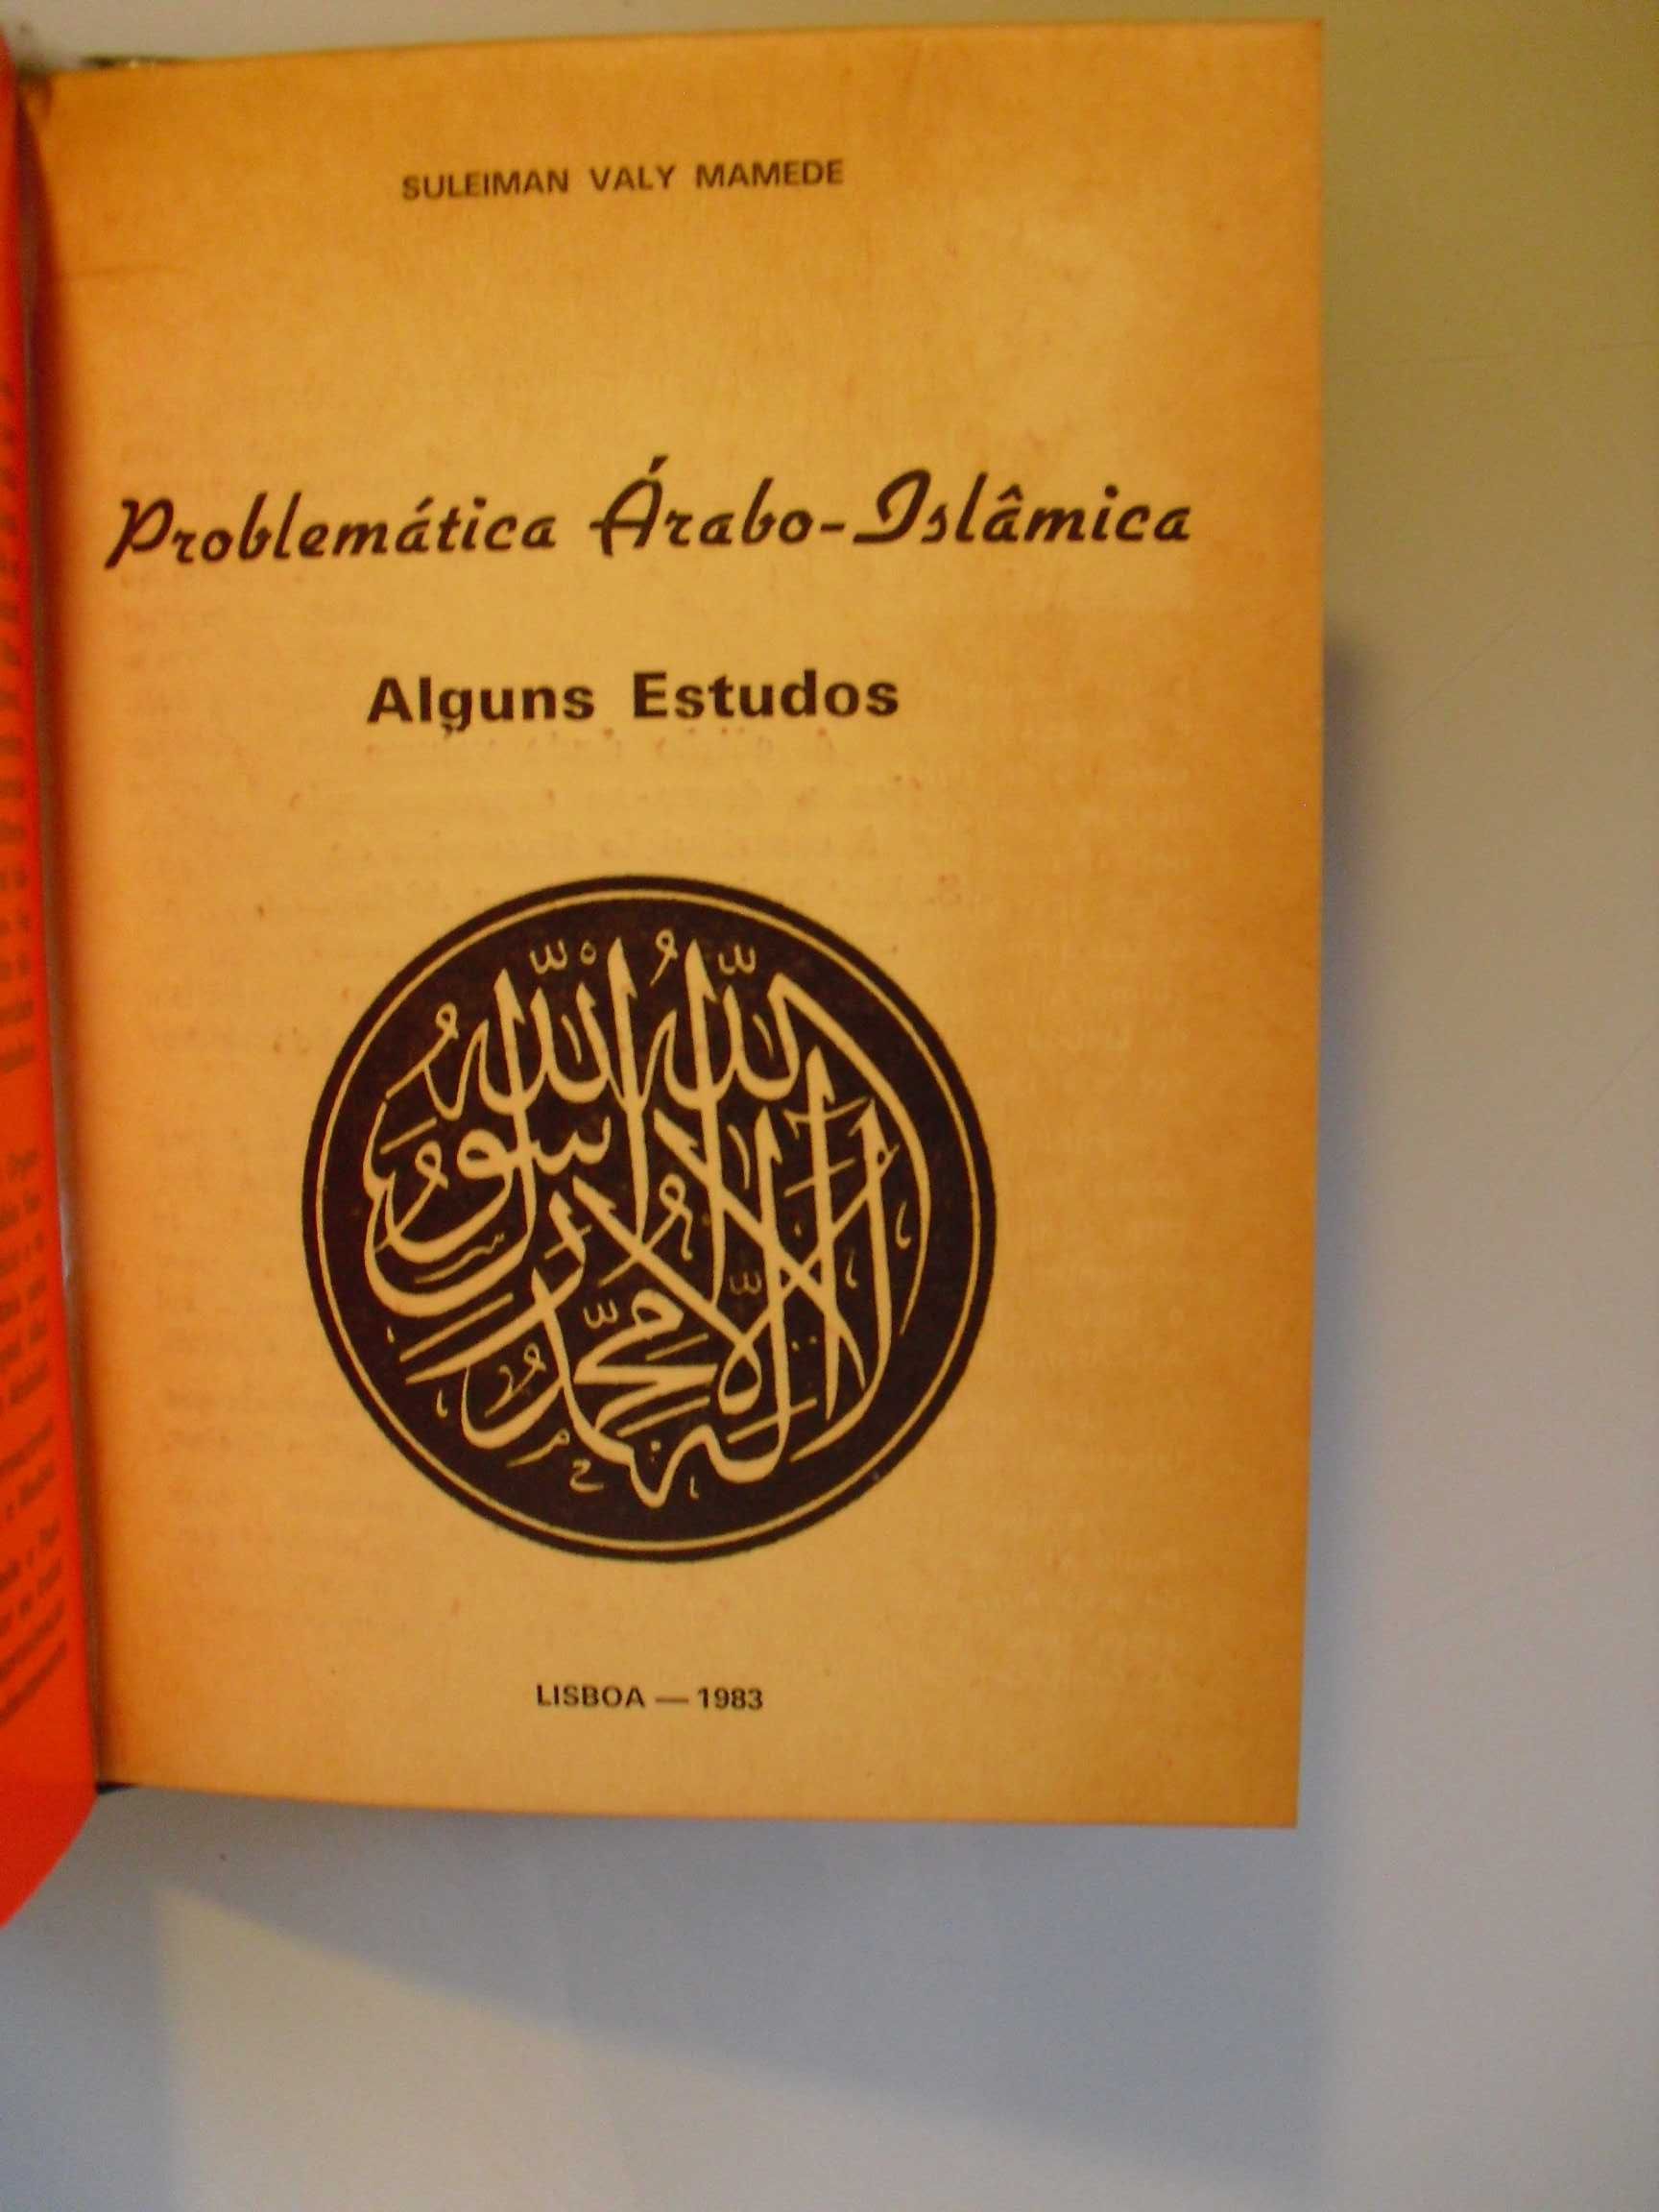 Mamede (Suleiman Valey);Manual de Doutrina Islâmica-Palestina